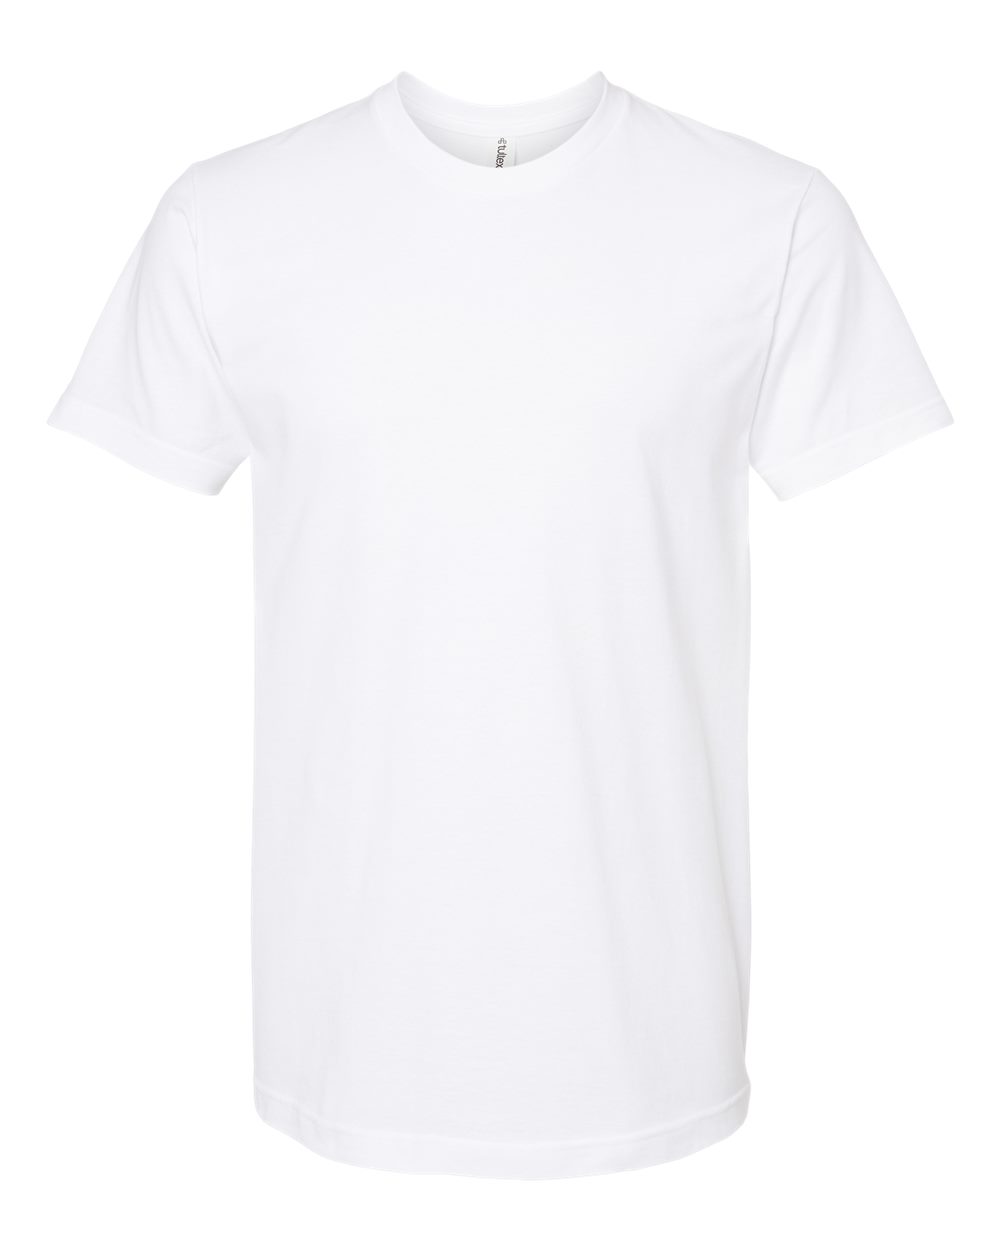 Tultex 202 - Unisex Fine Jersey T-Shirt - Heather Charcoal Xs